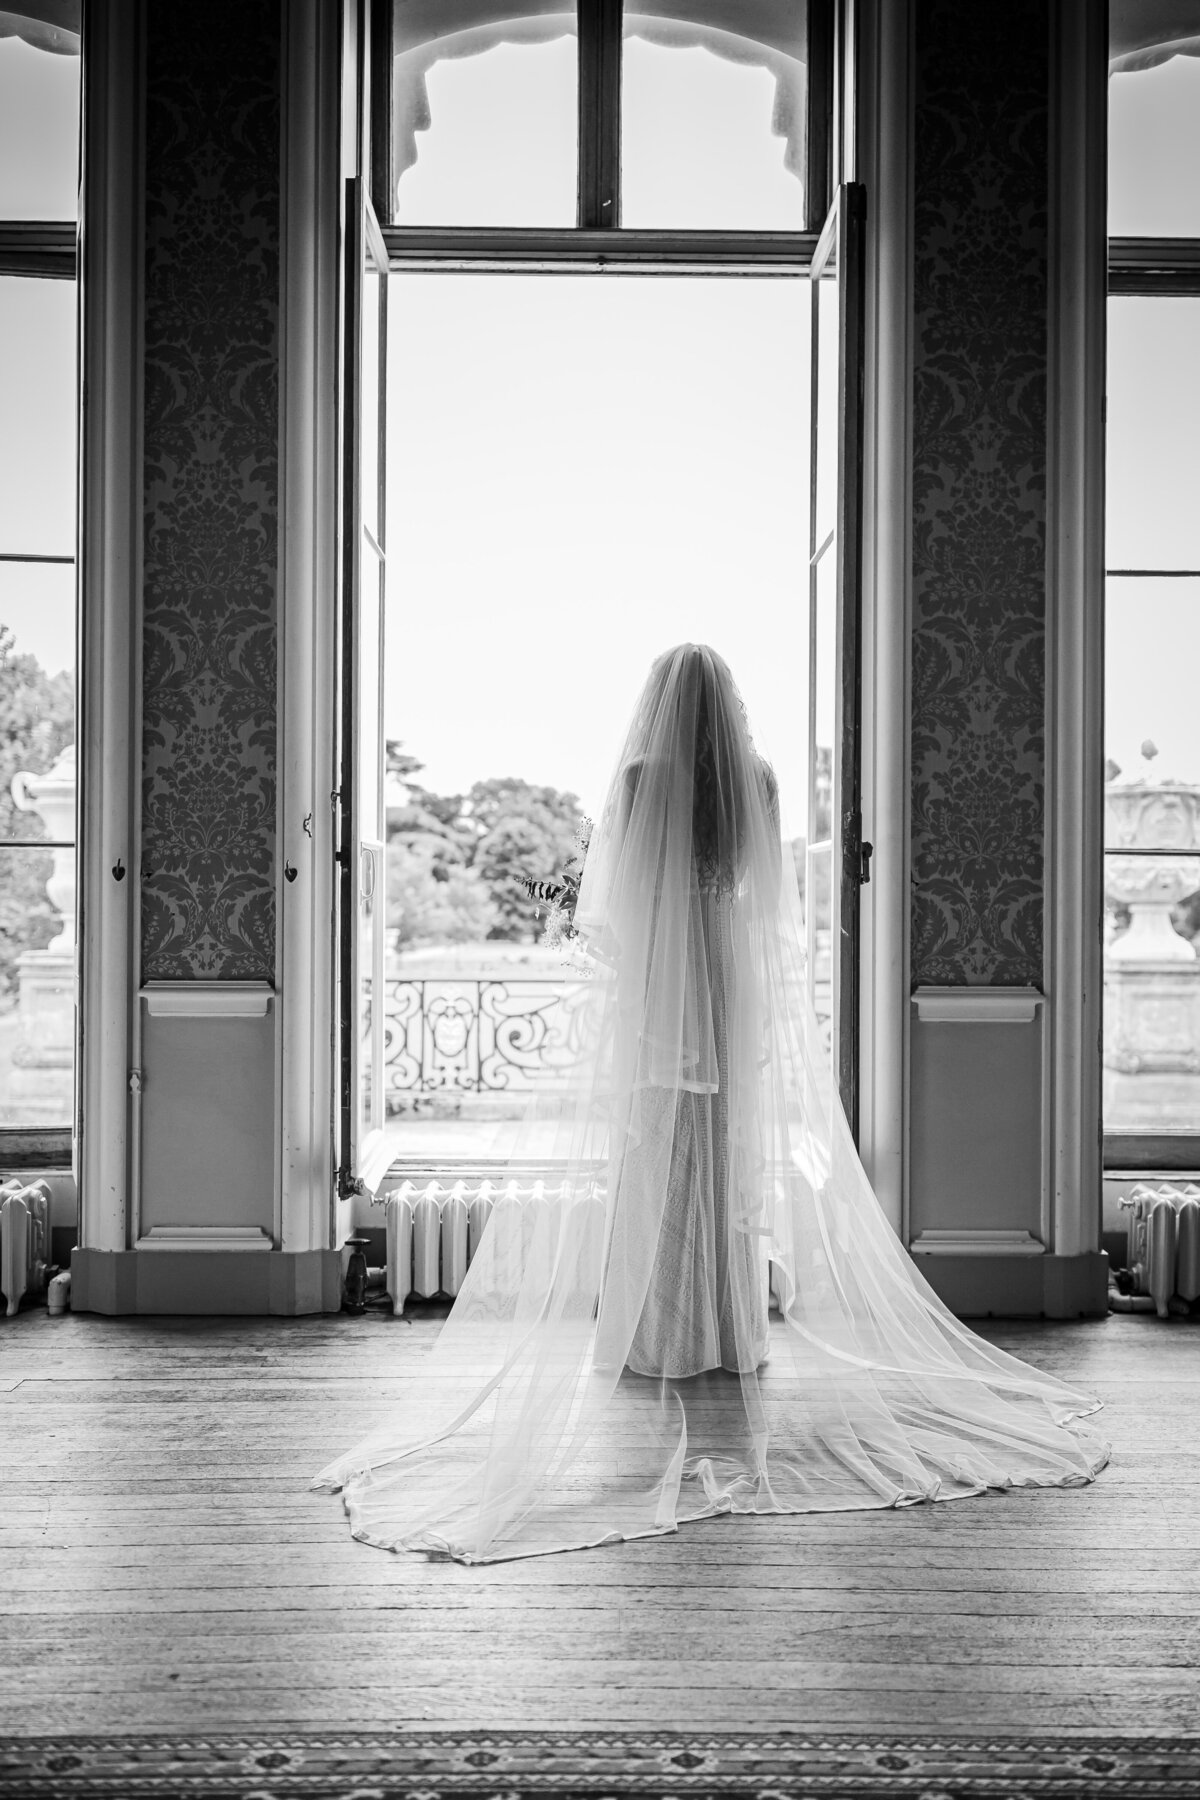 Bride stood by the window in her wedding dress